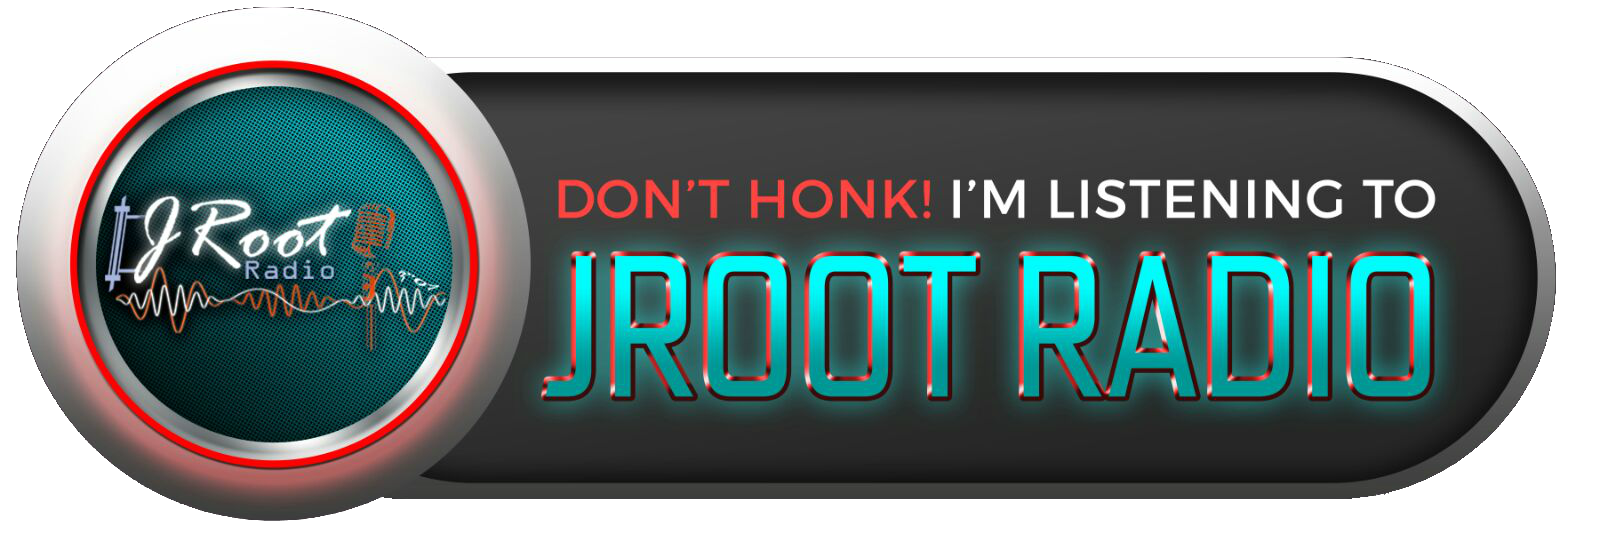 JRoot Radio Bumper Magnet